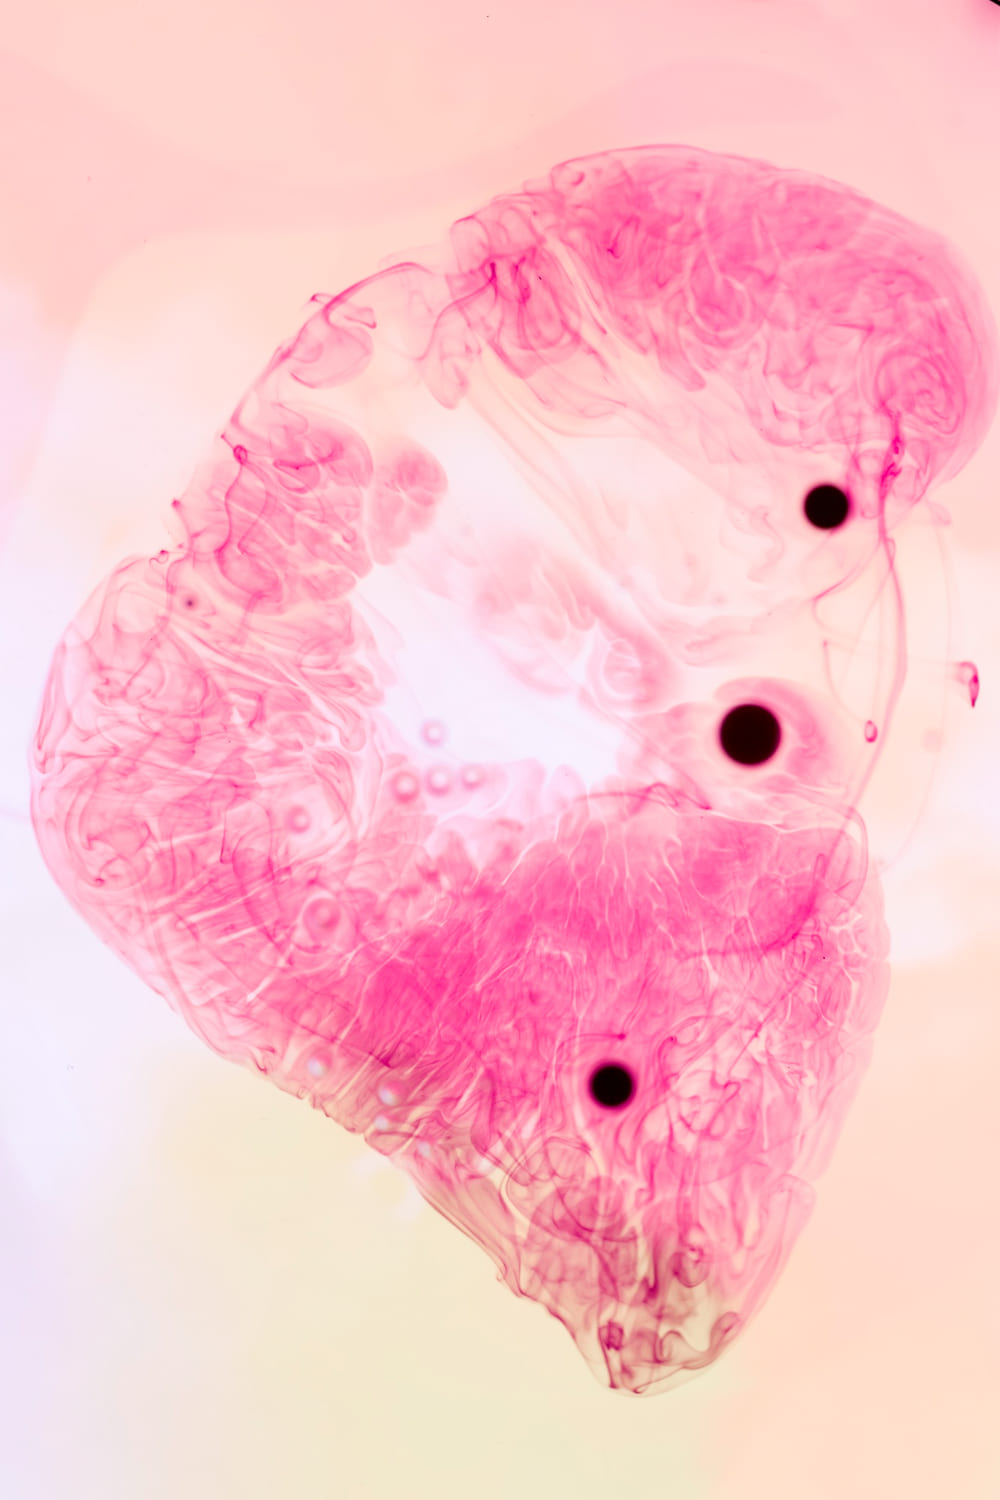 A Dark, Irregular Mass in the Lower Right Lobe of Lung